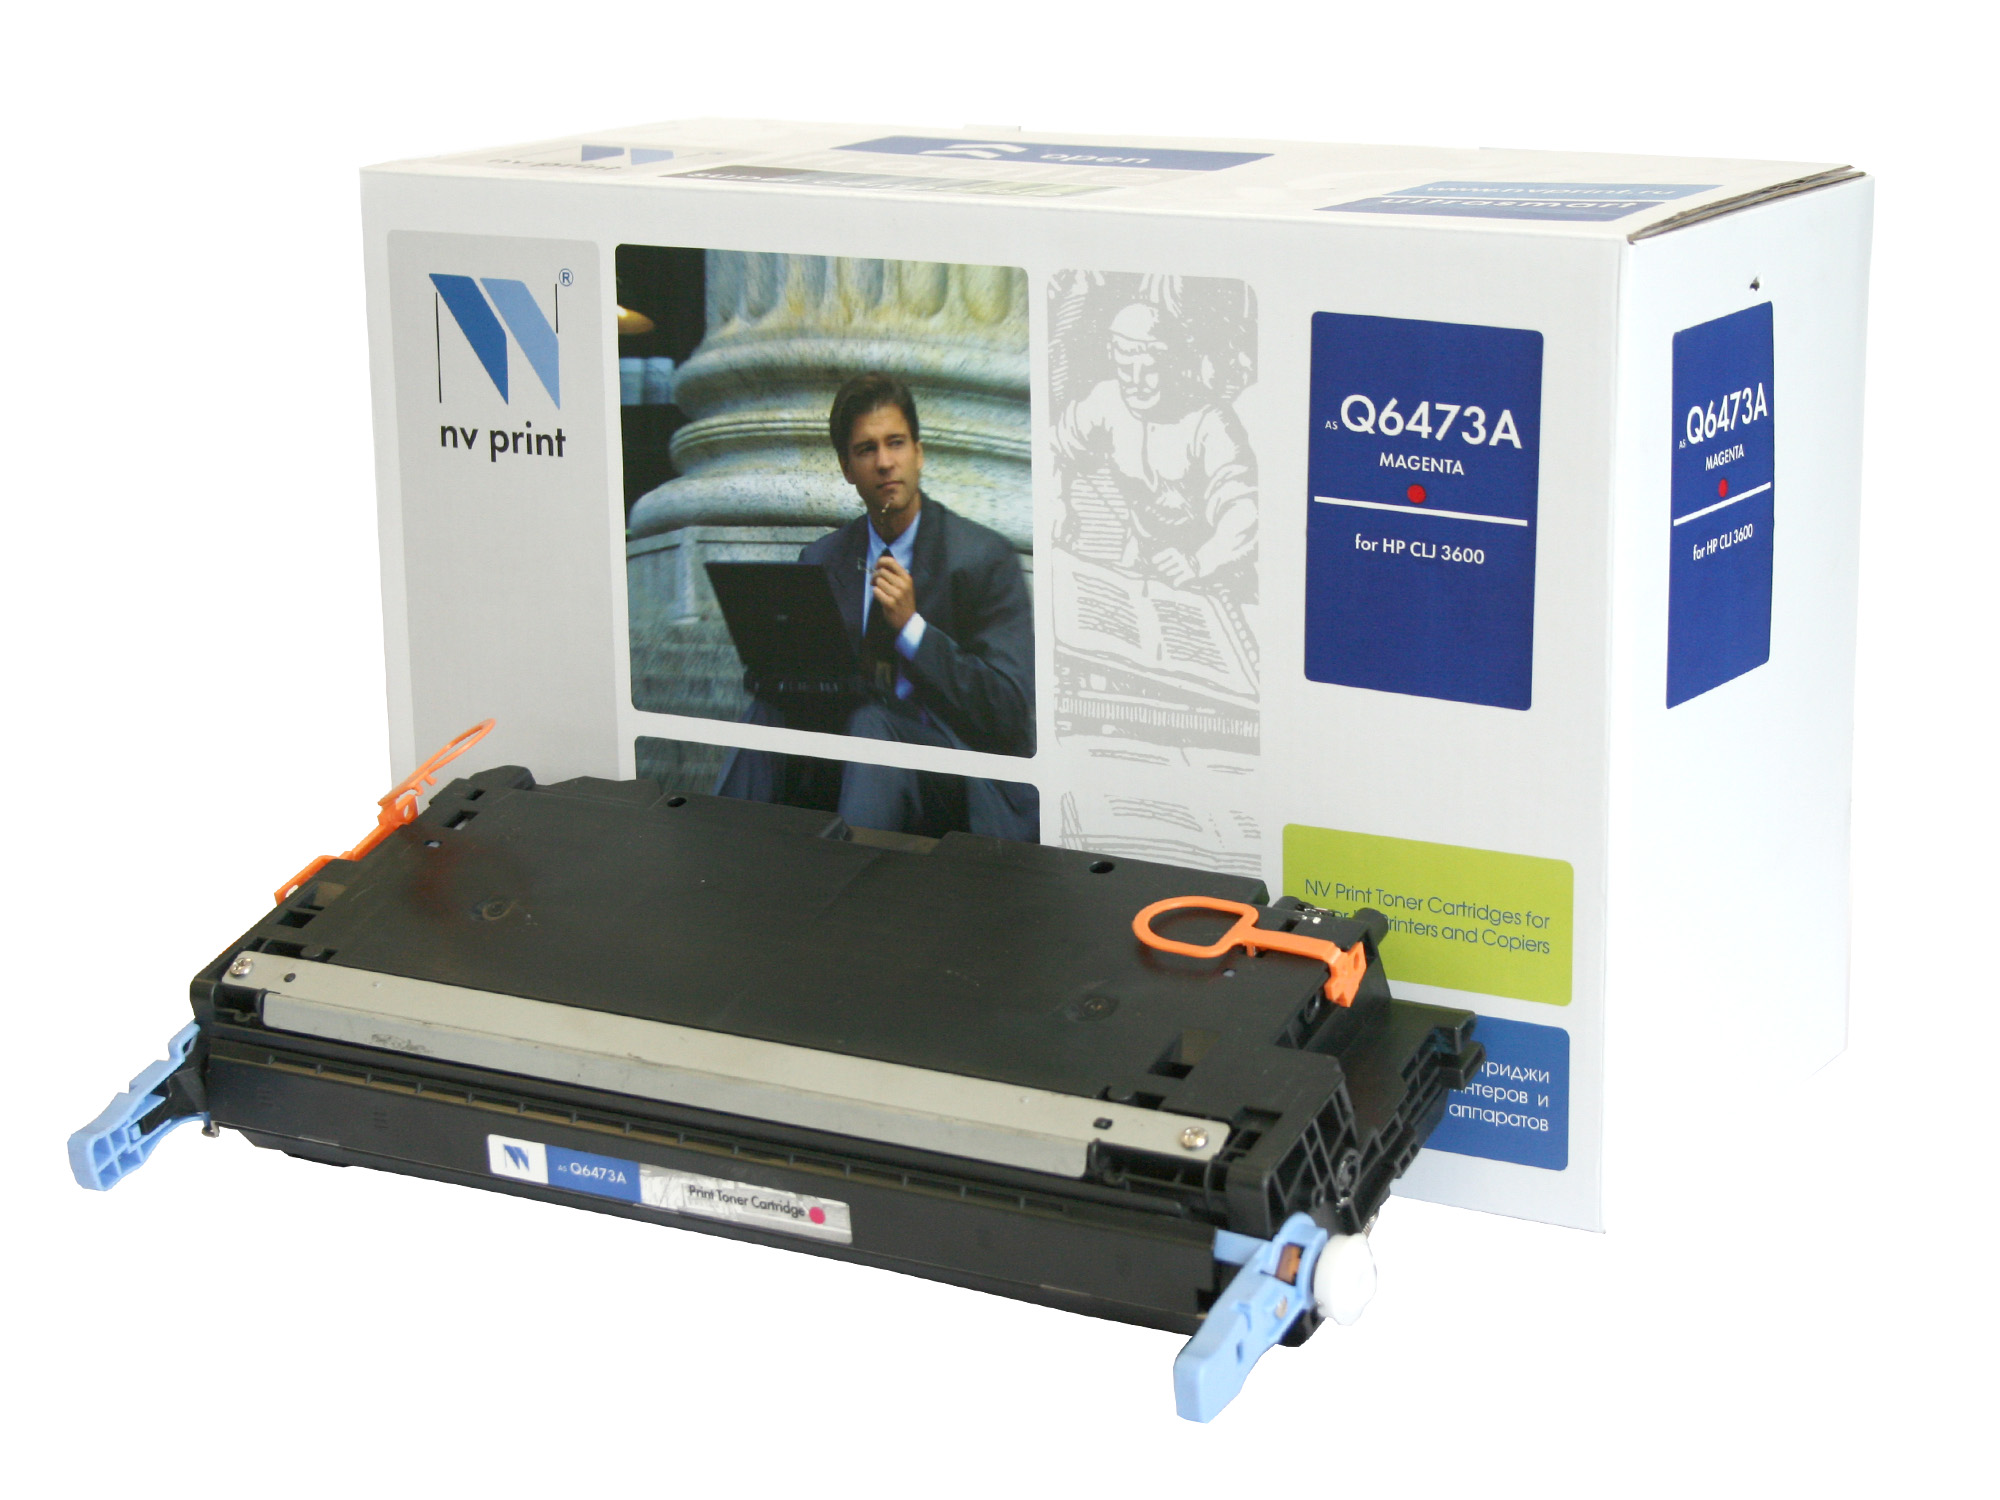   NV-Print  HP COLOR LaserJet 3505/3600/3800 Magenta, Q6473A